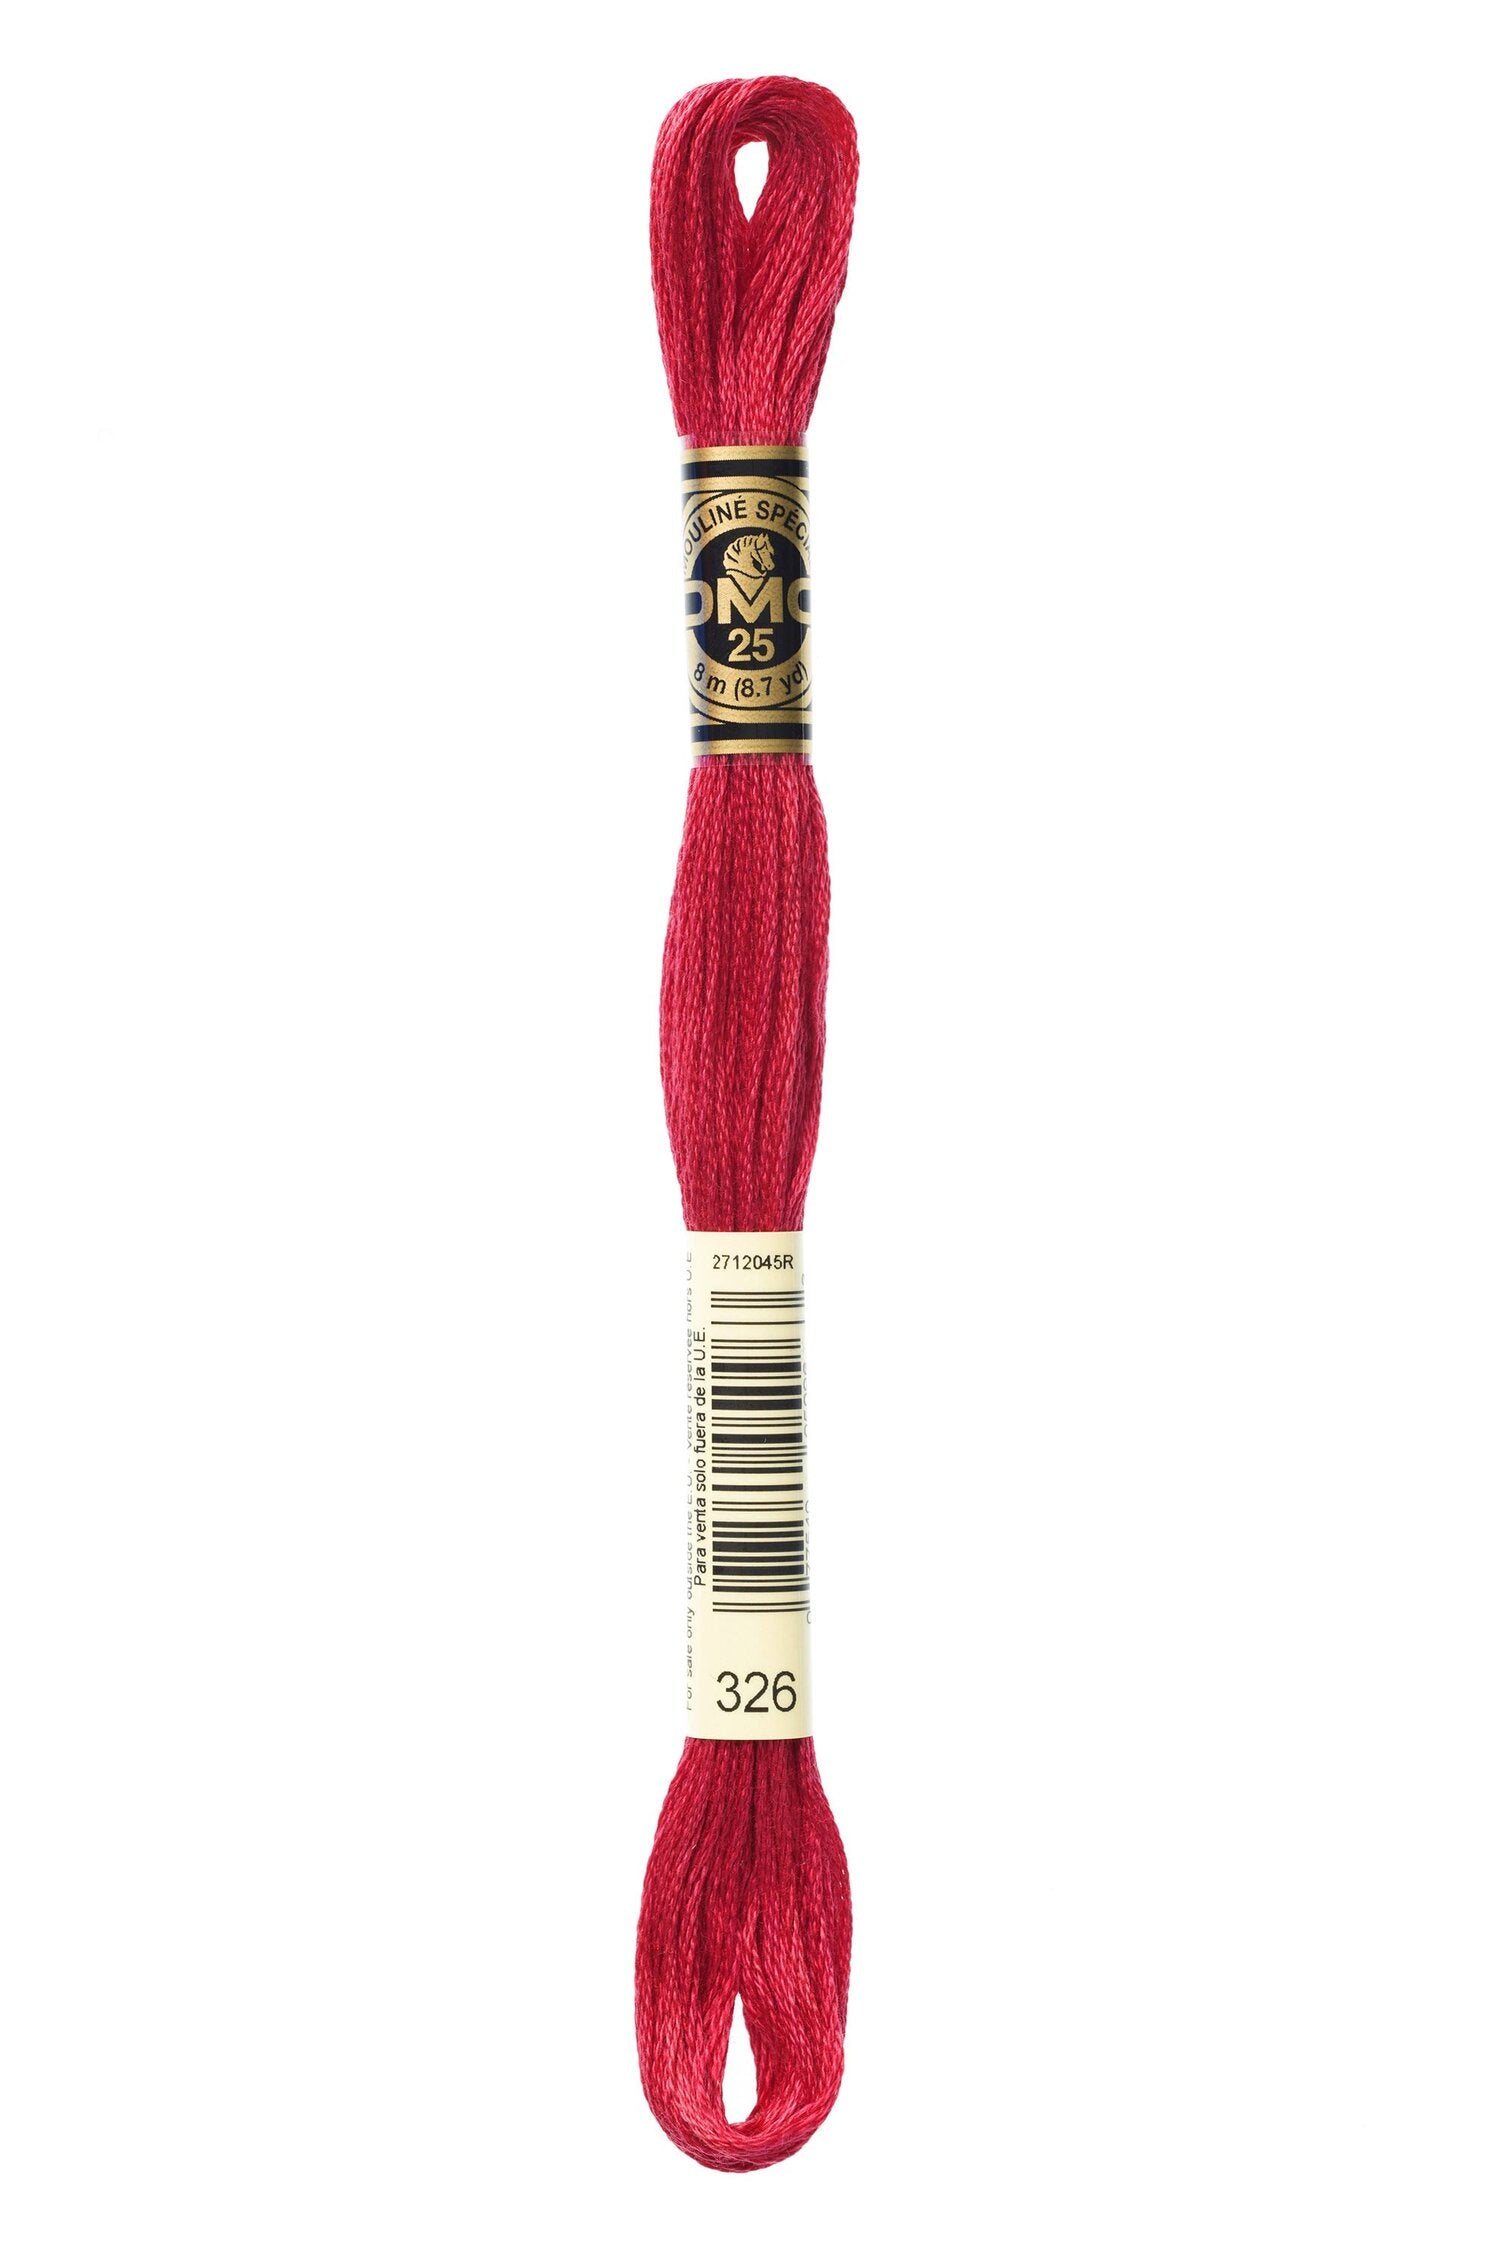 DMC 326 - Rose - Very Dark - DMC 6 Strand Embroidery Thread, Thread & Floss, Thread & Floss, The Crafty Grimalkin - A Cross Stitch Store